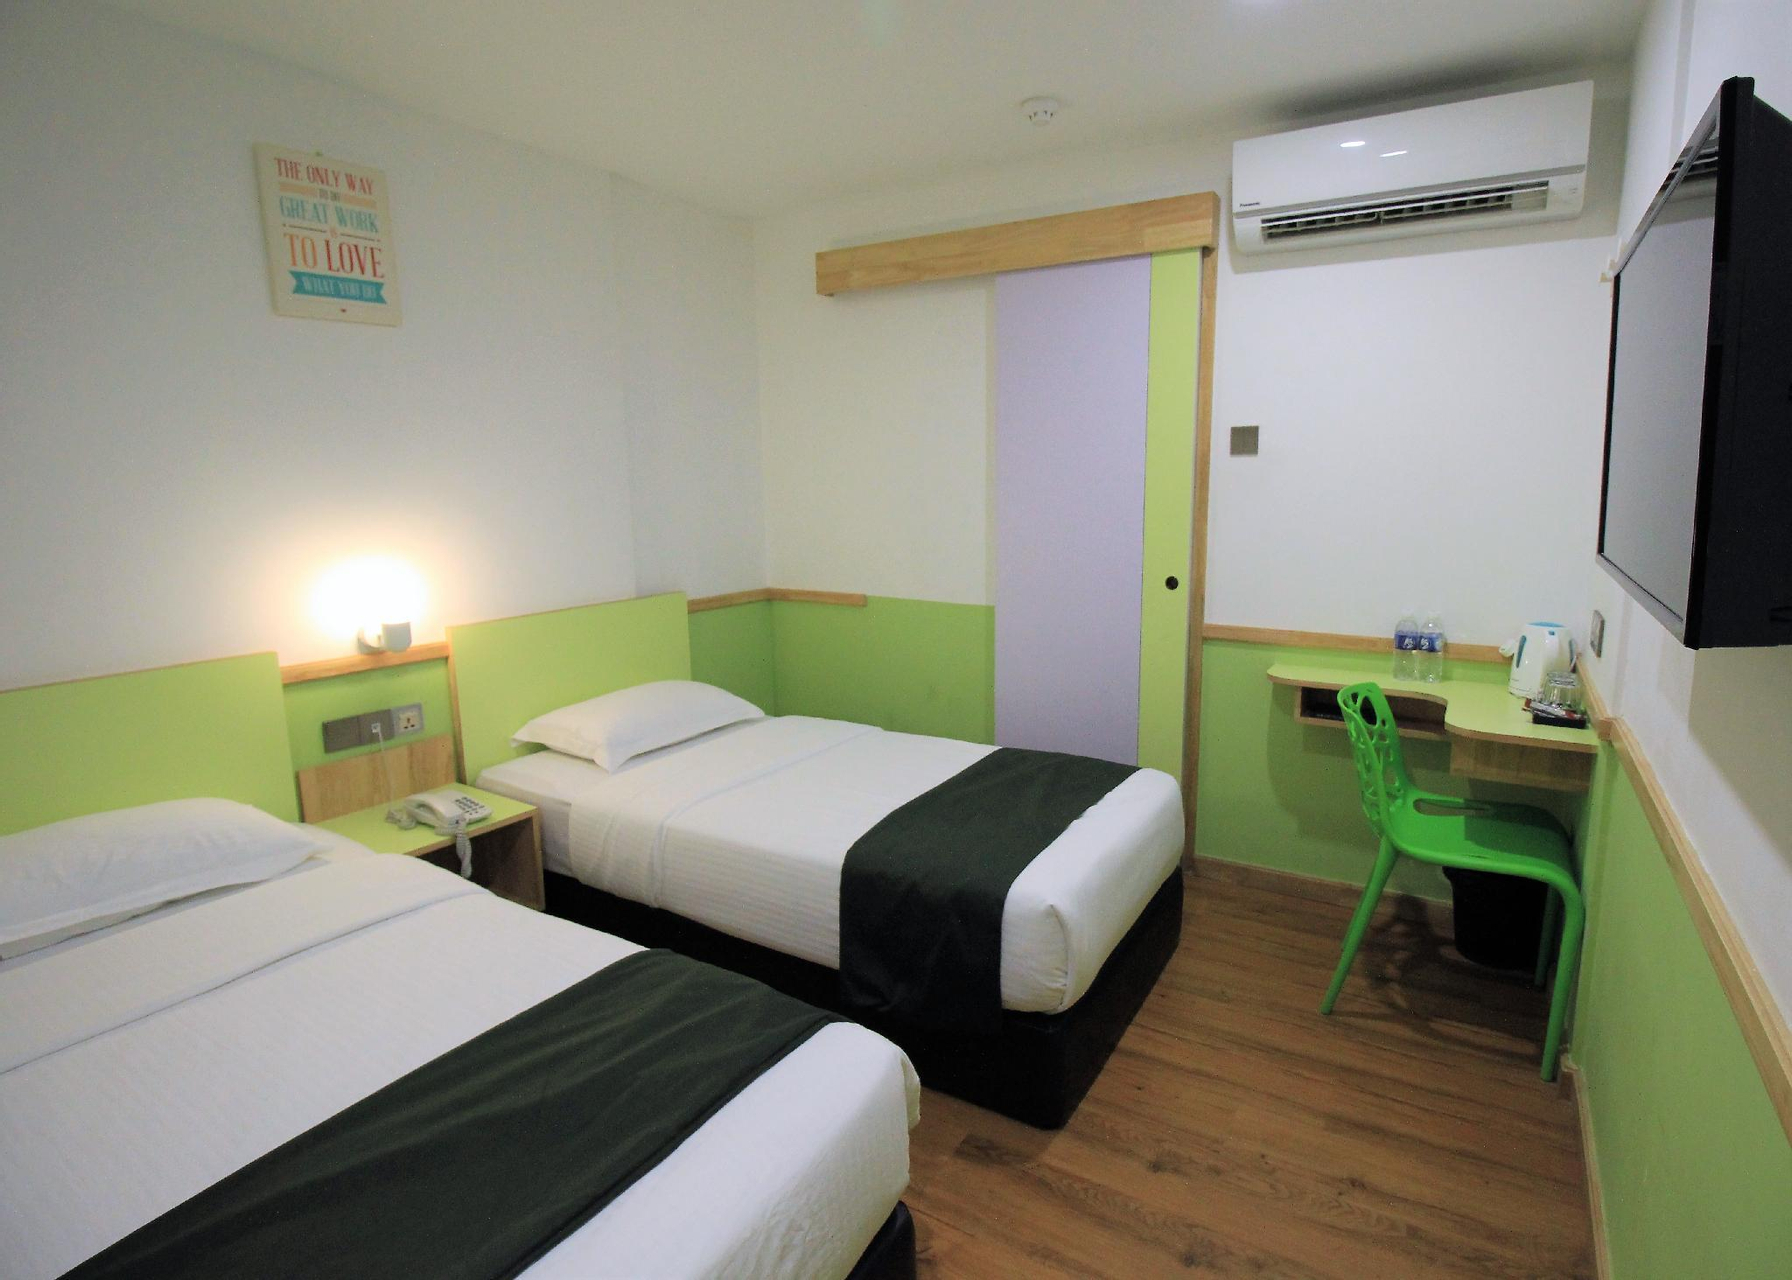 Bedroom 2, HOTEL JSIA, Kota Kinabalu